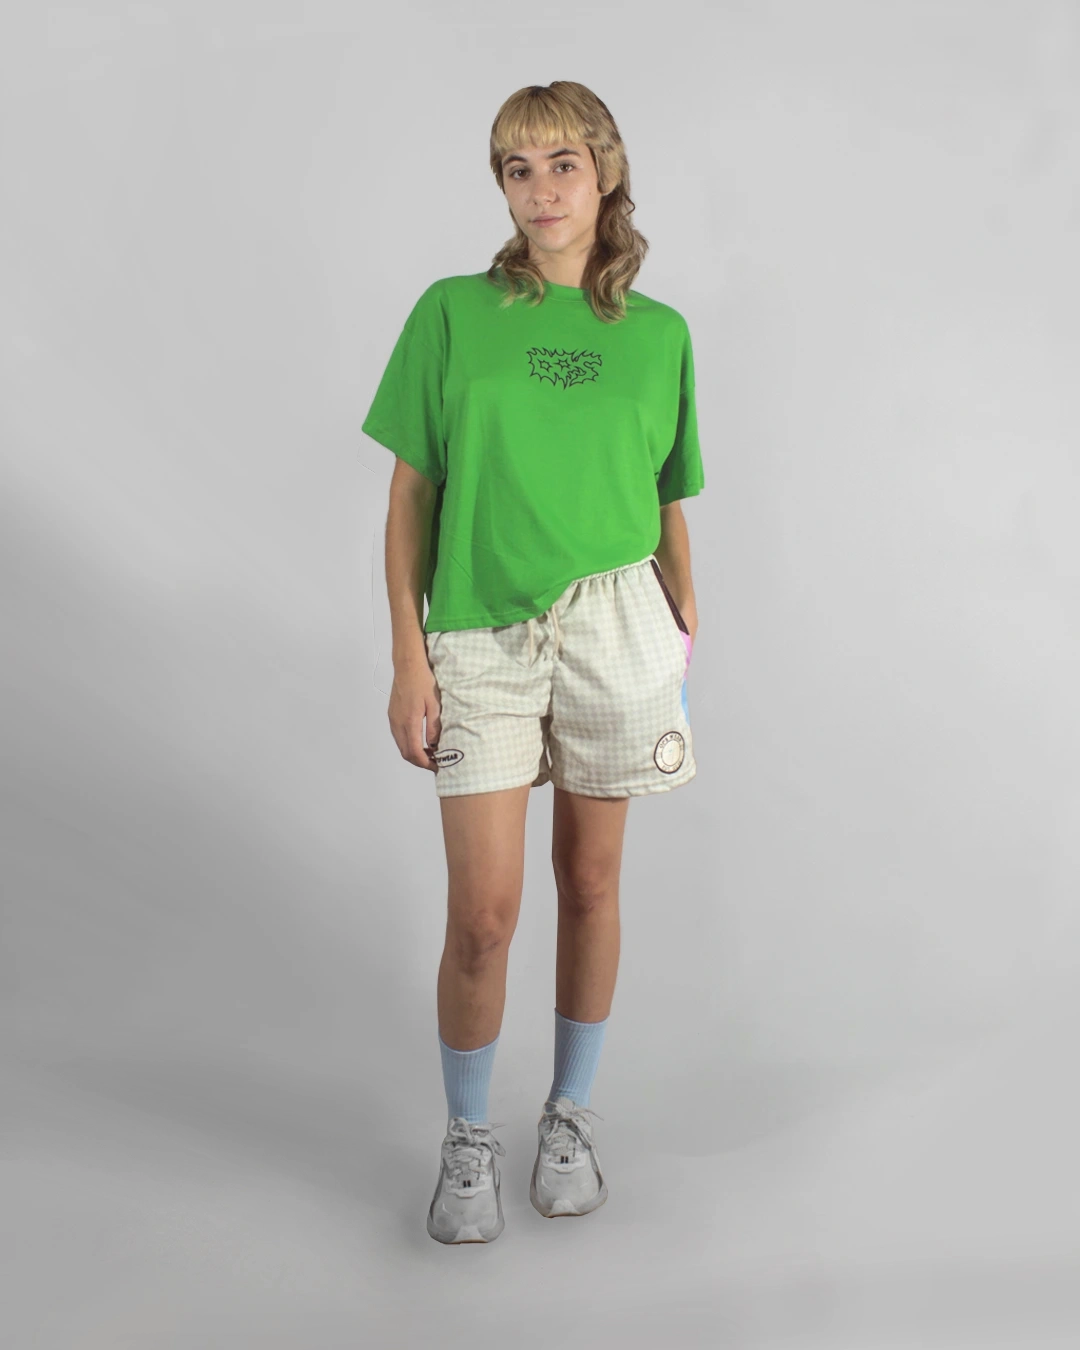 modelo usando remera unknow verde washed boxi fit outfit completo con medias celeste zapatillas deoprtivas